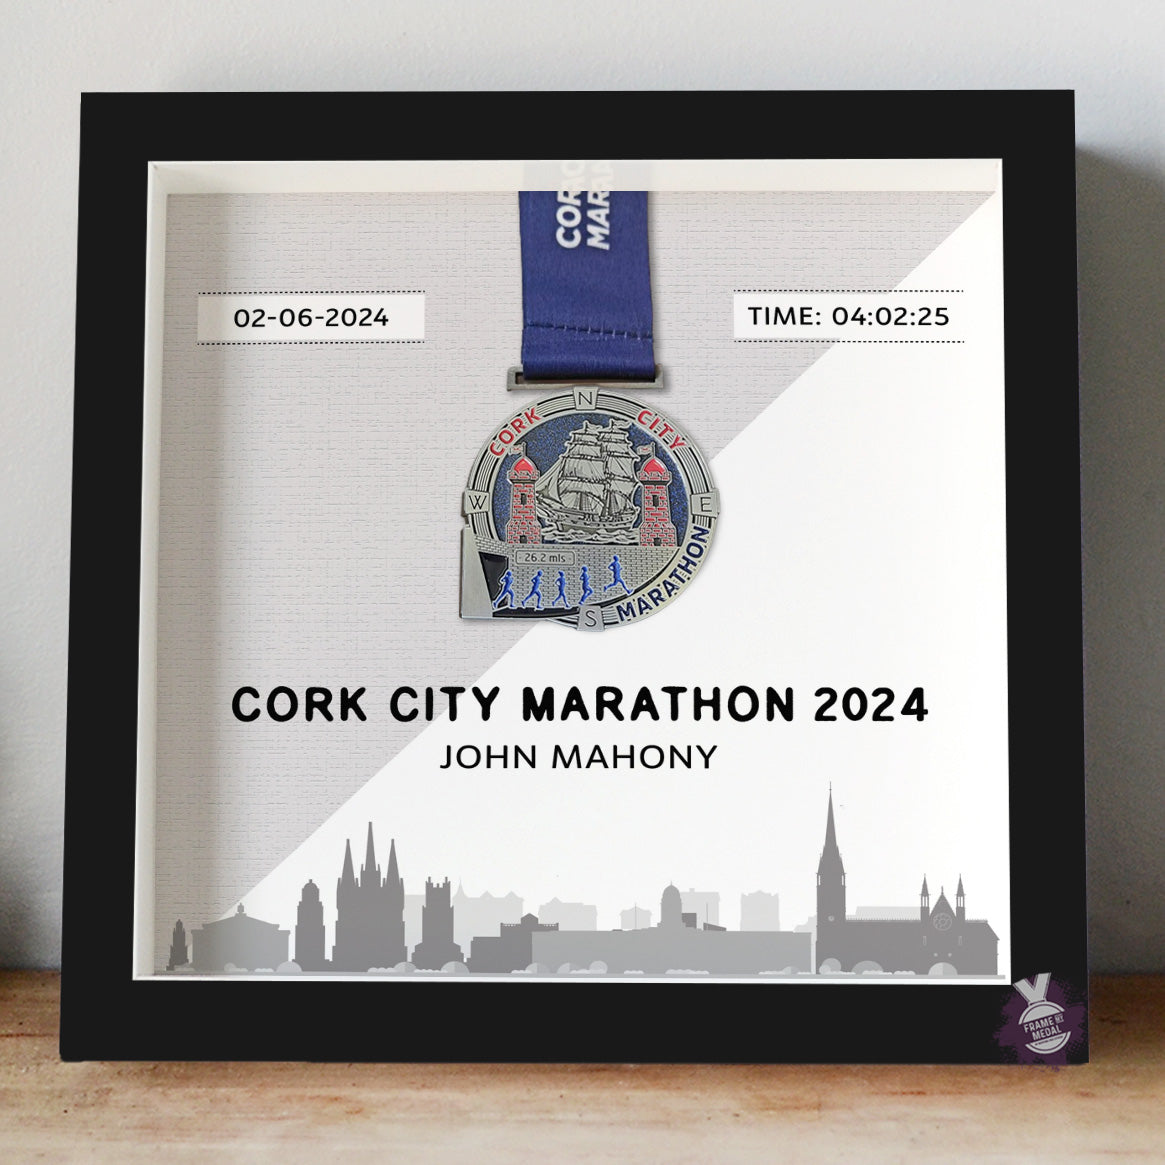 Cork City Marathon medal display frame